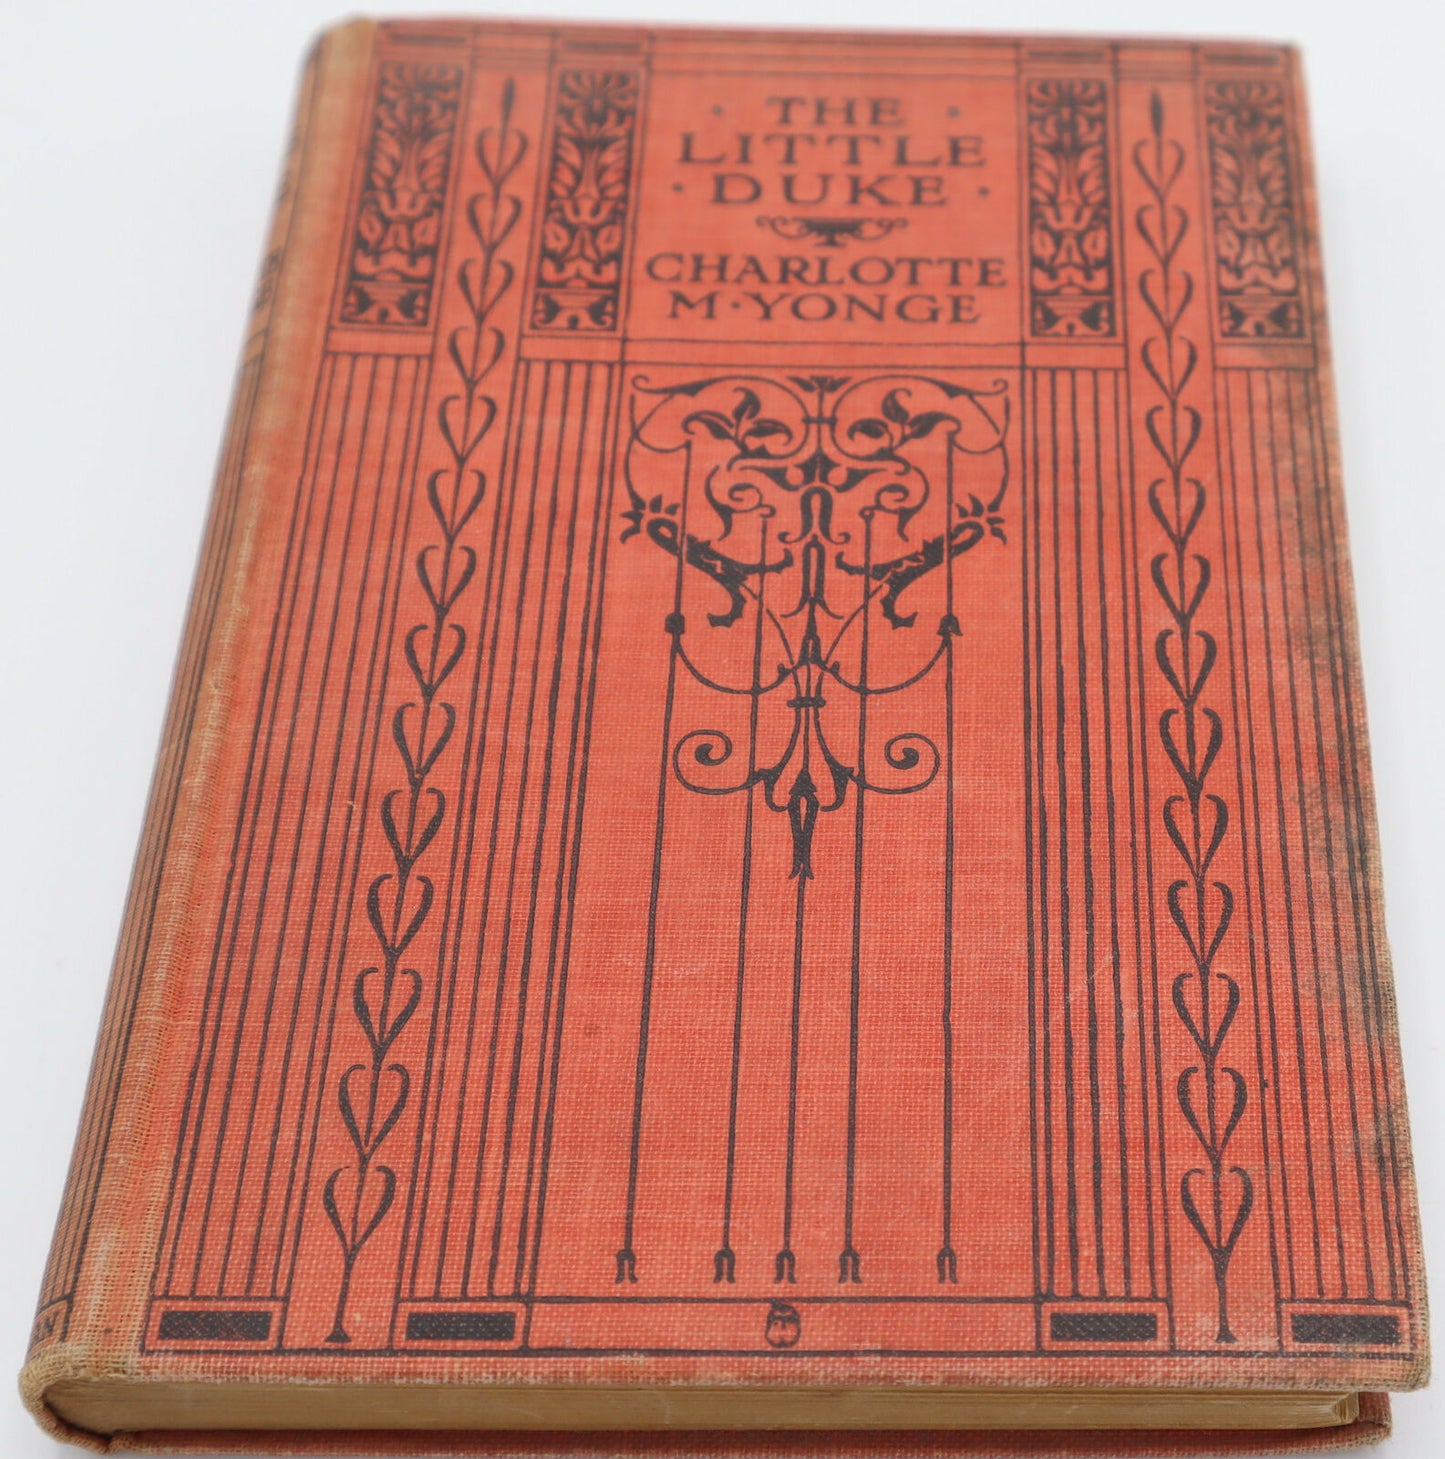 The Little Duke, Richard The Fearless, Charlotte M. Yonge, Macmillan, 1924